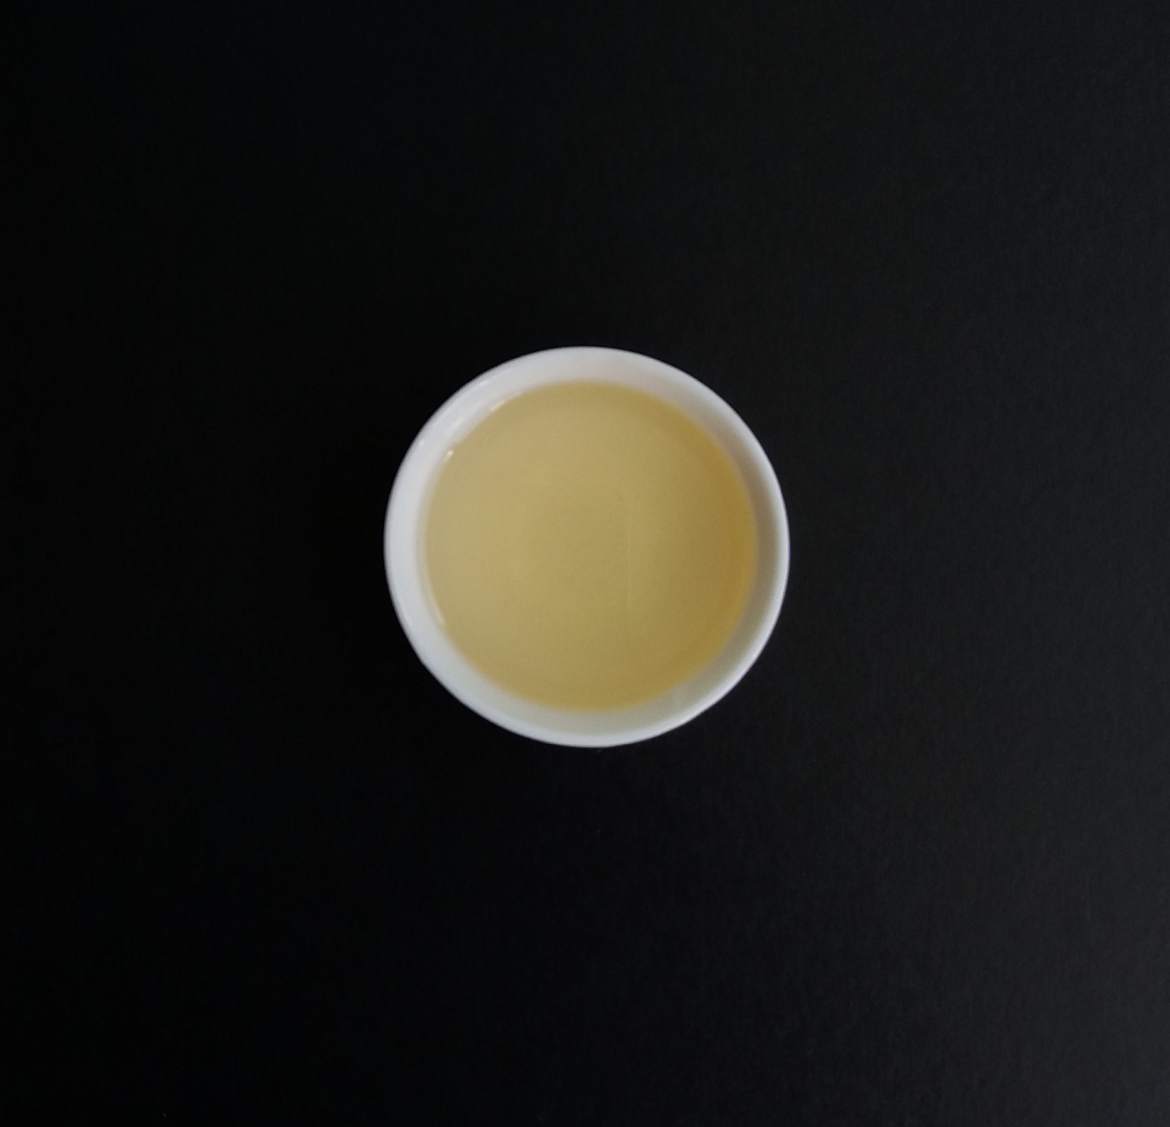 Джианг Люй Ча - Имбирный Зеленый Чай